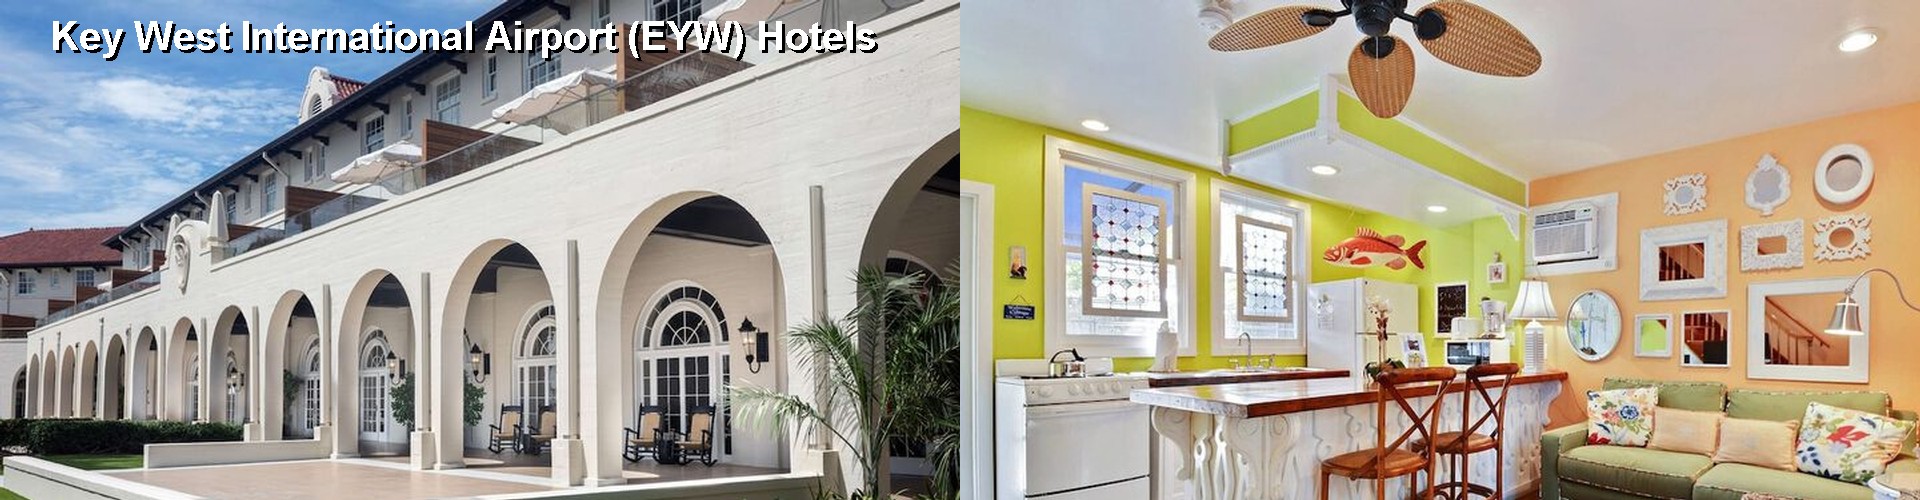 5 Best Hotels near Key West International Airport (EYW)